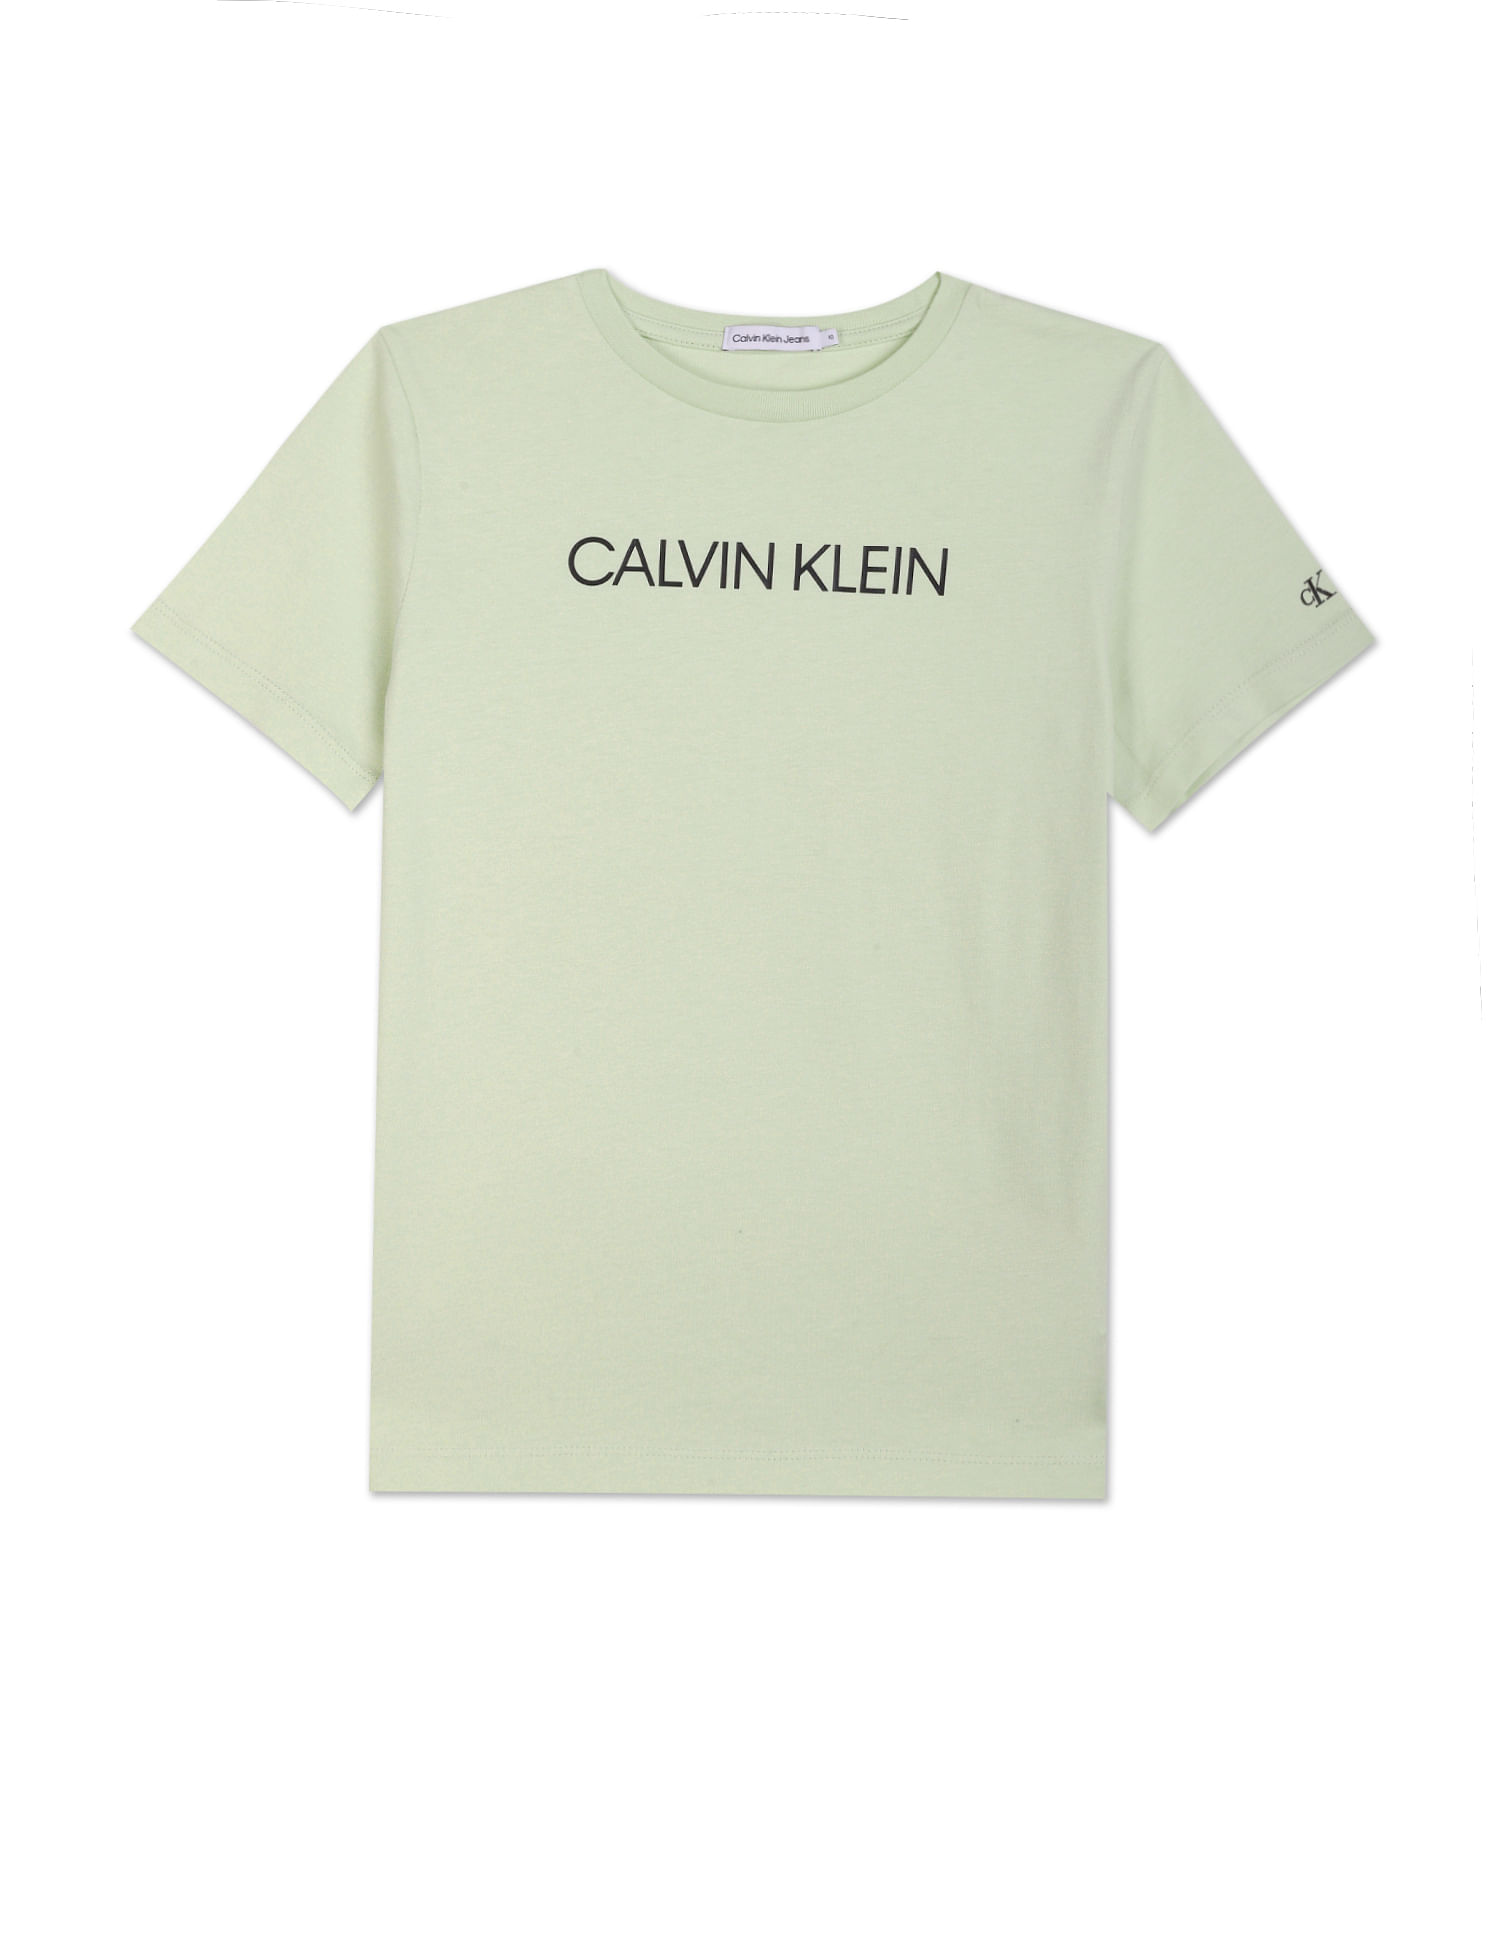 Jeans Klein Institutional Calvin T-shirt Buy